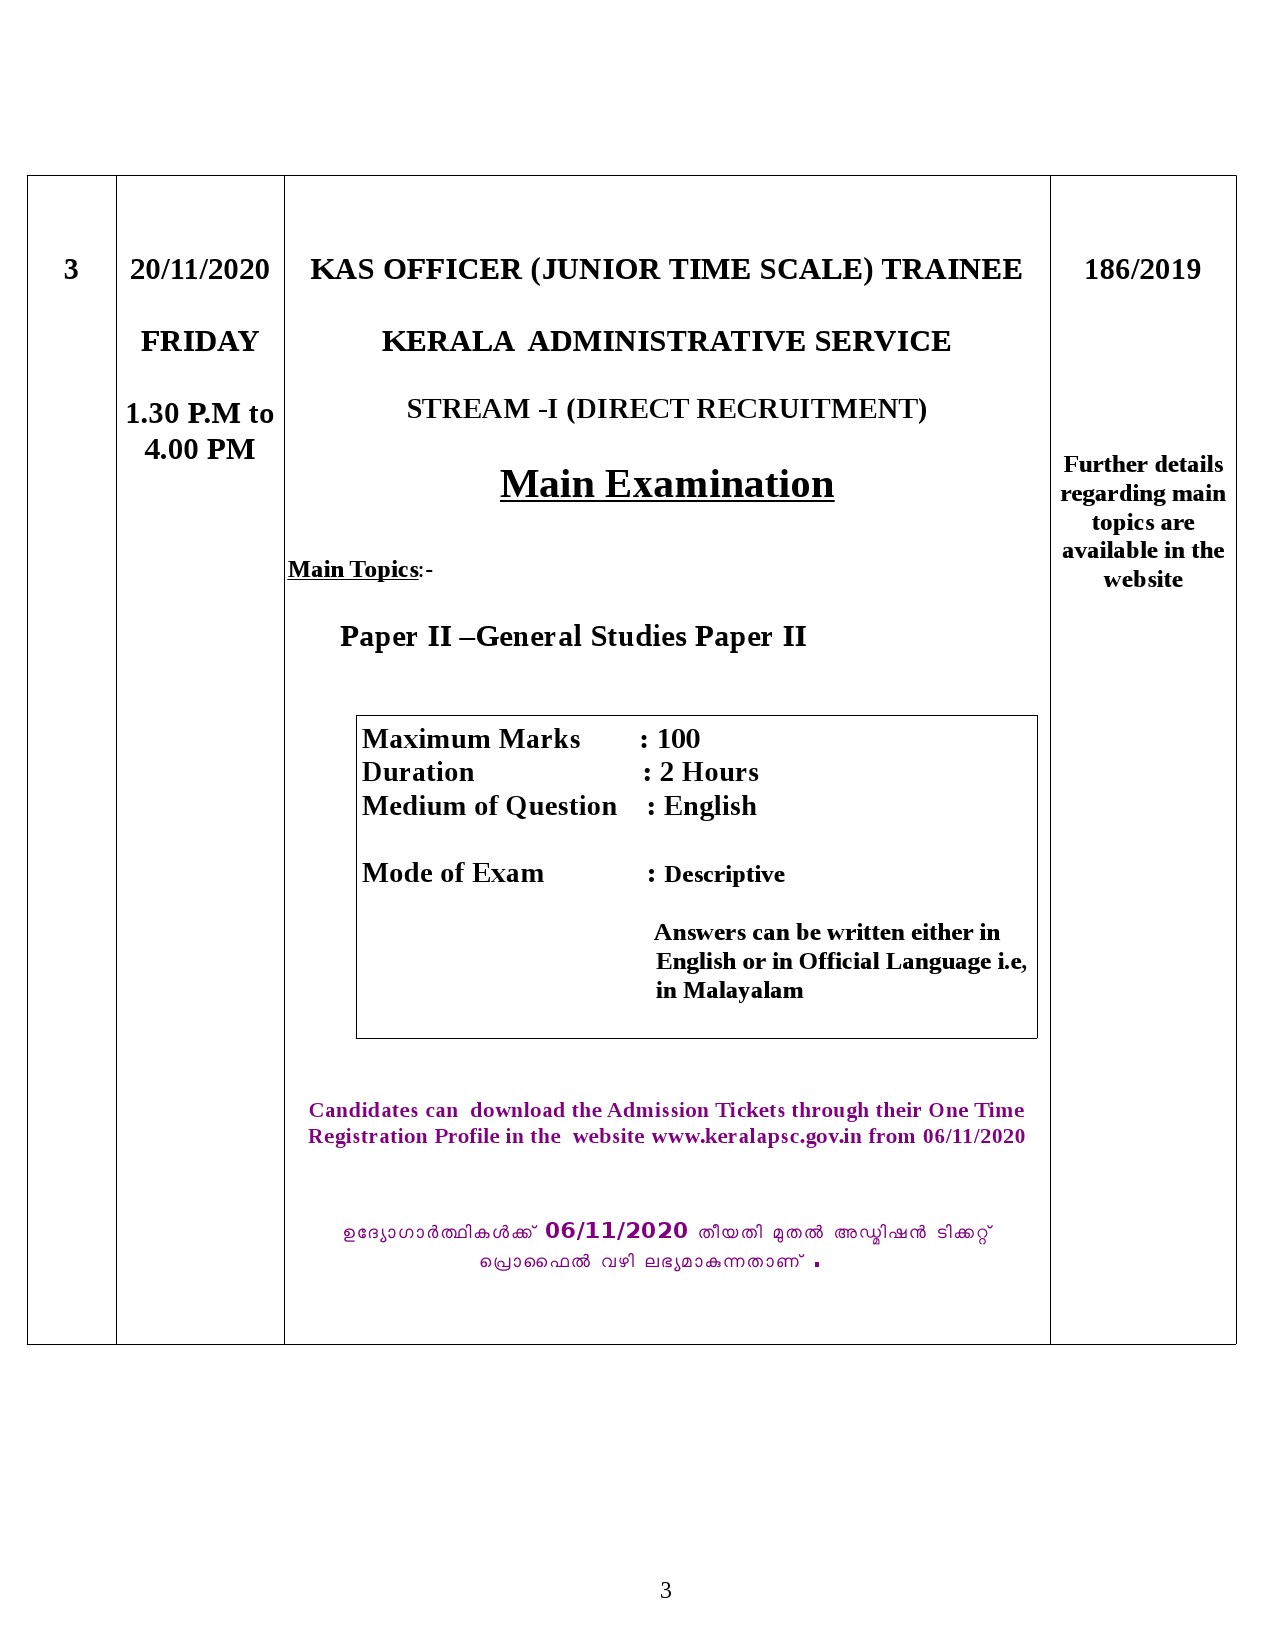 Kerala PSC Additional Exam for November 2020 - Notification Image 3